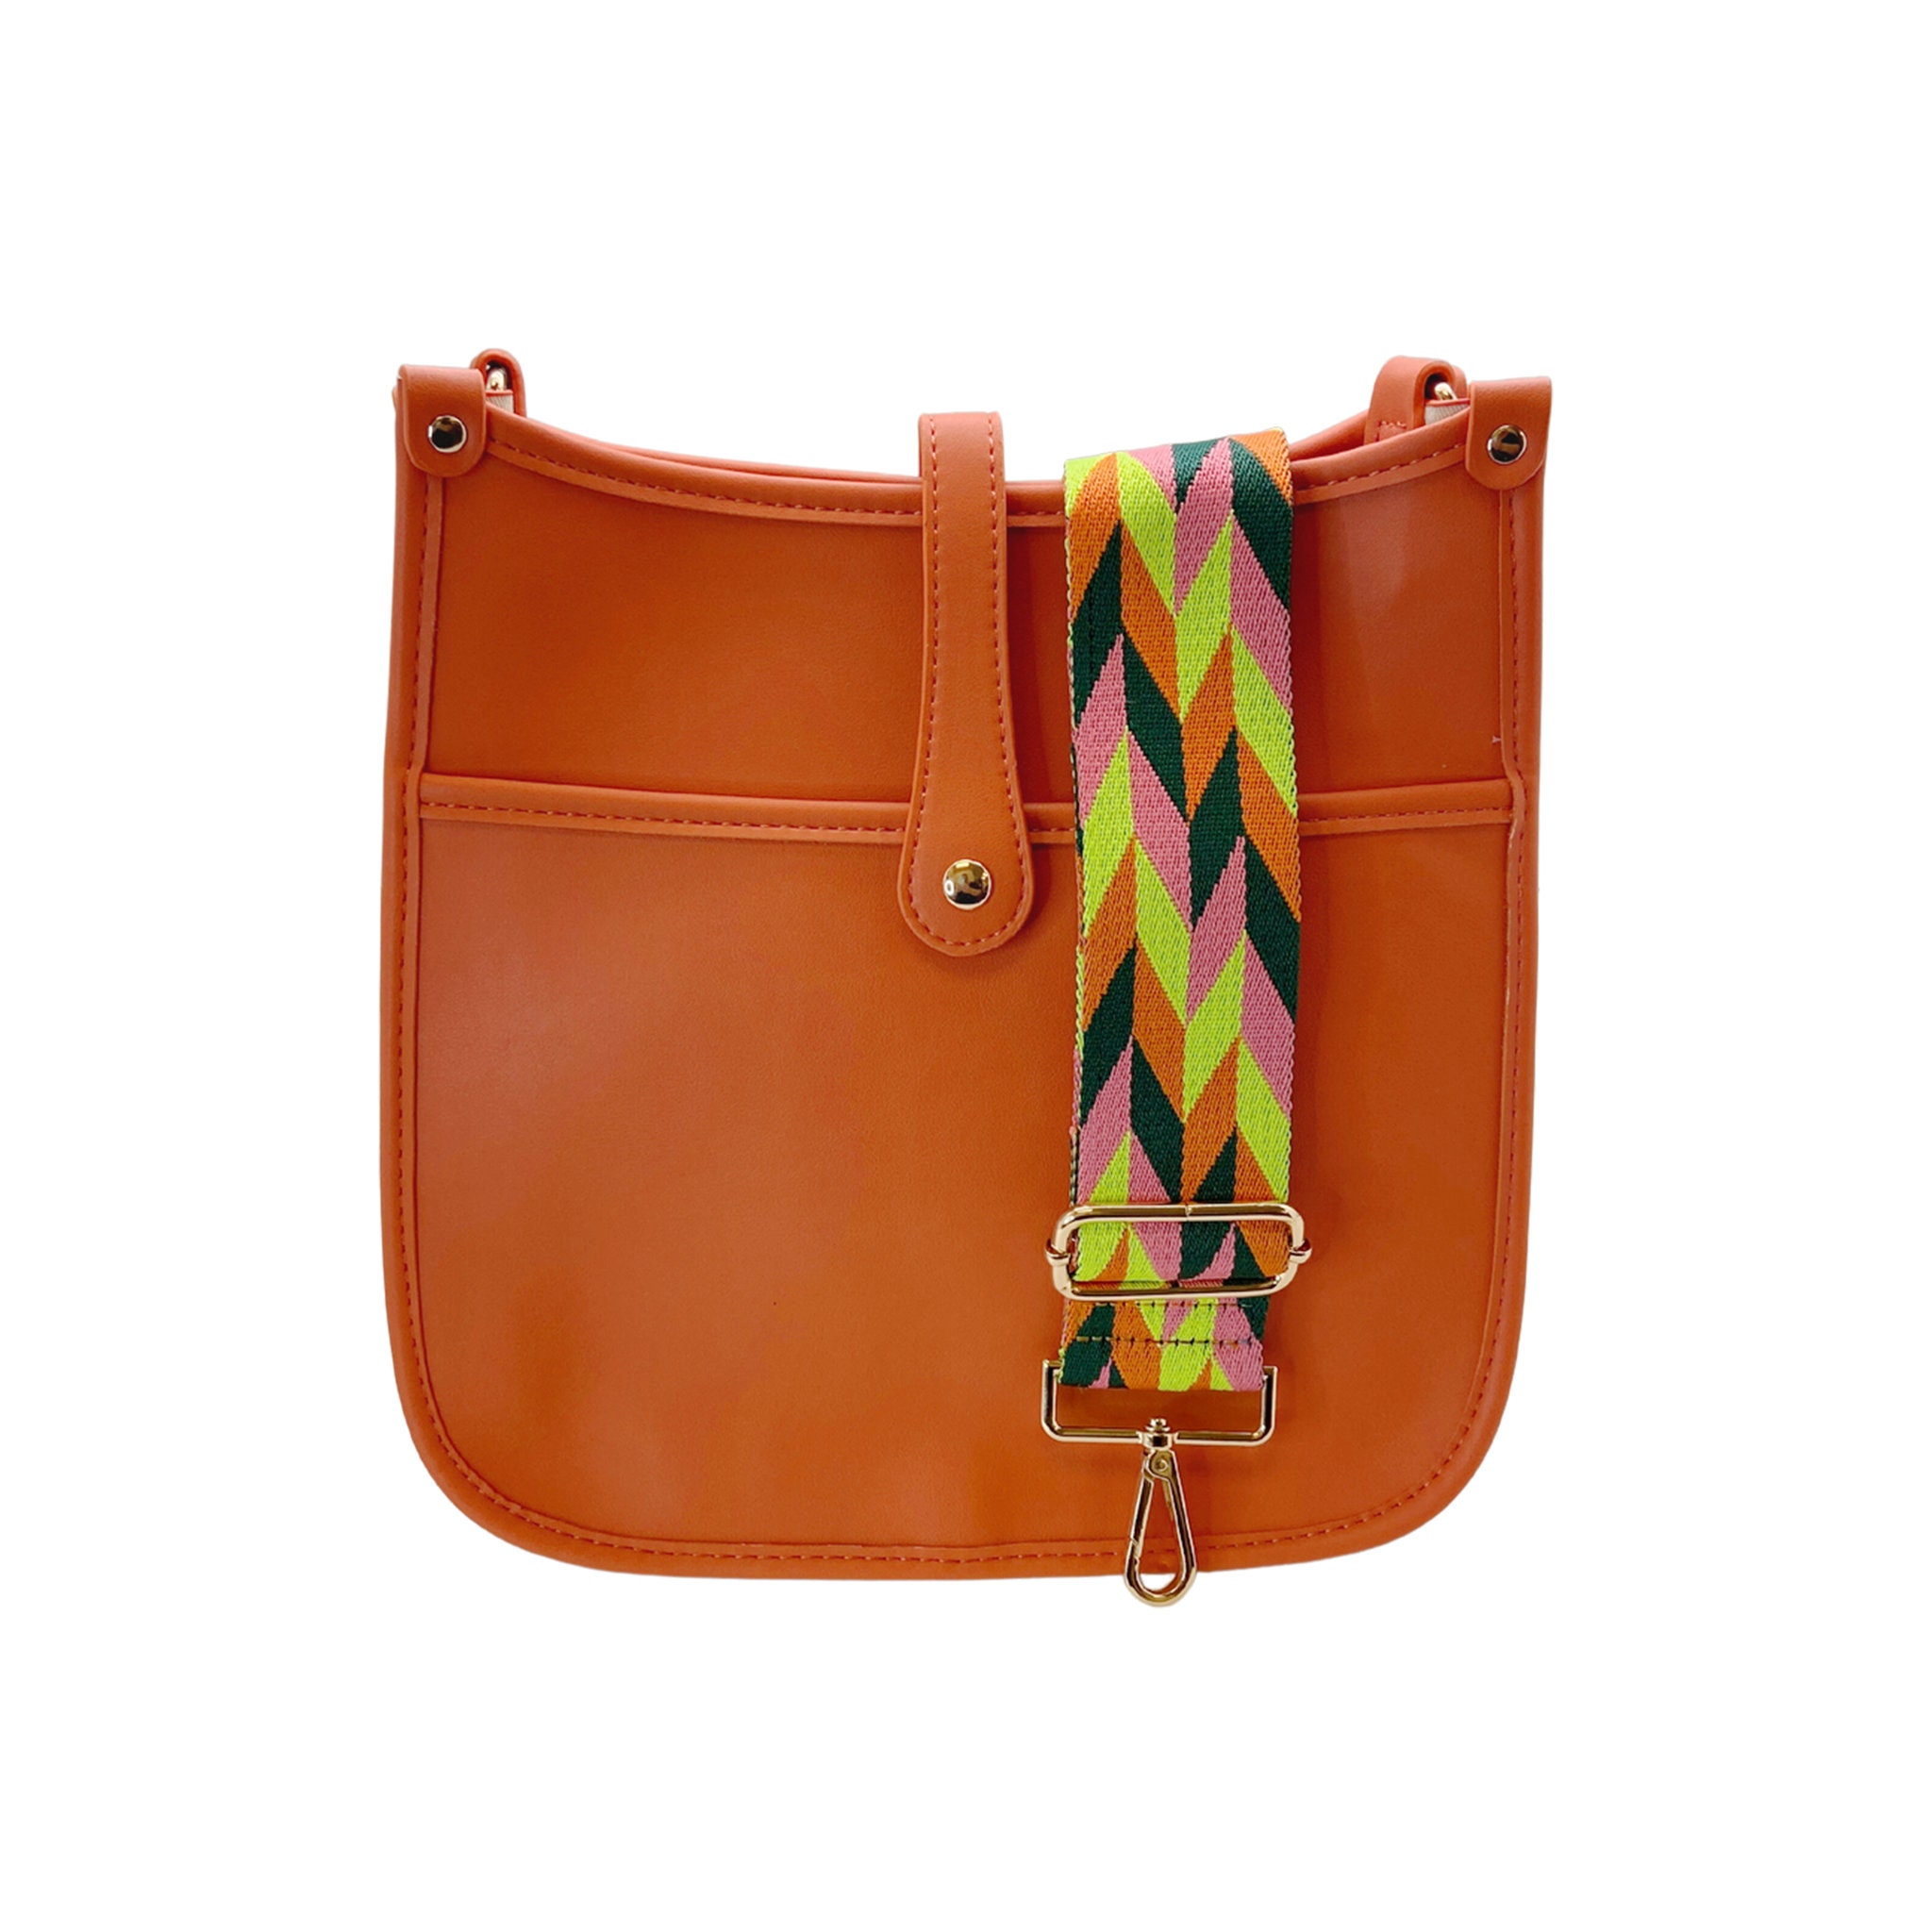 OrangeTag Purse Strap Replacement Guitar Style Multicolor Canvas Crossbody Strap for Handbags (37#)